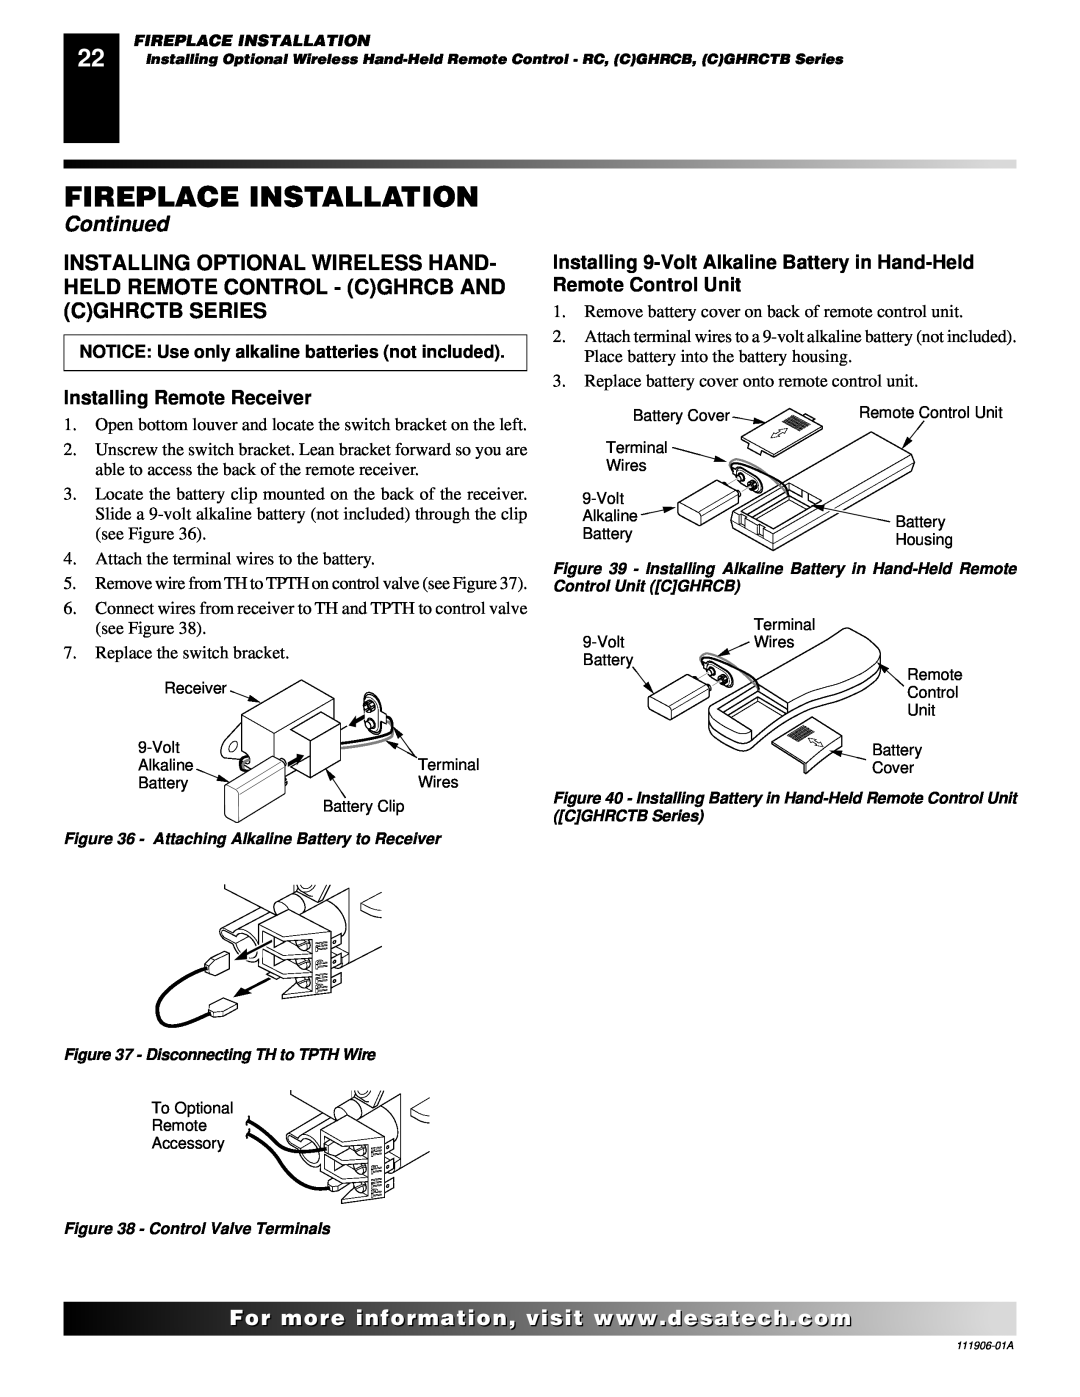 Desa (V)V42NA(1) installation manual Fireplace Installation, Continued, Installing Remote Receiver 